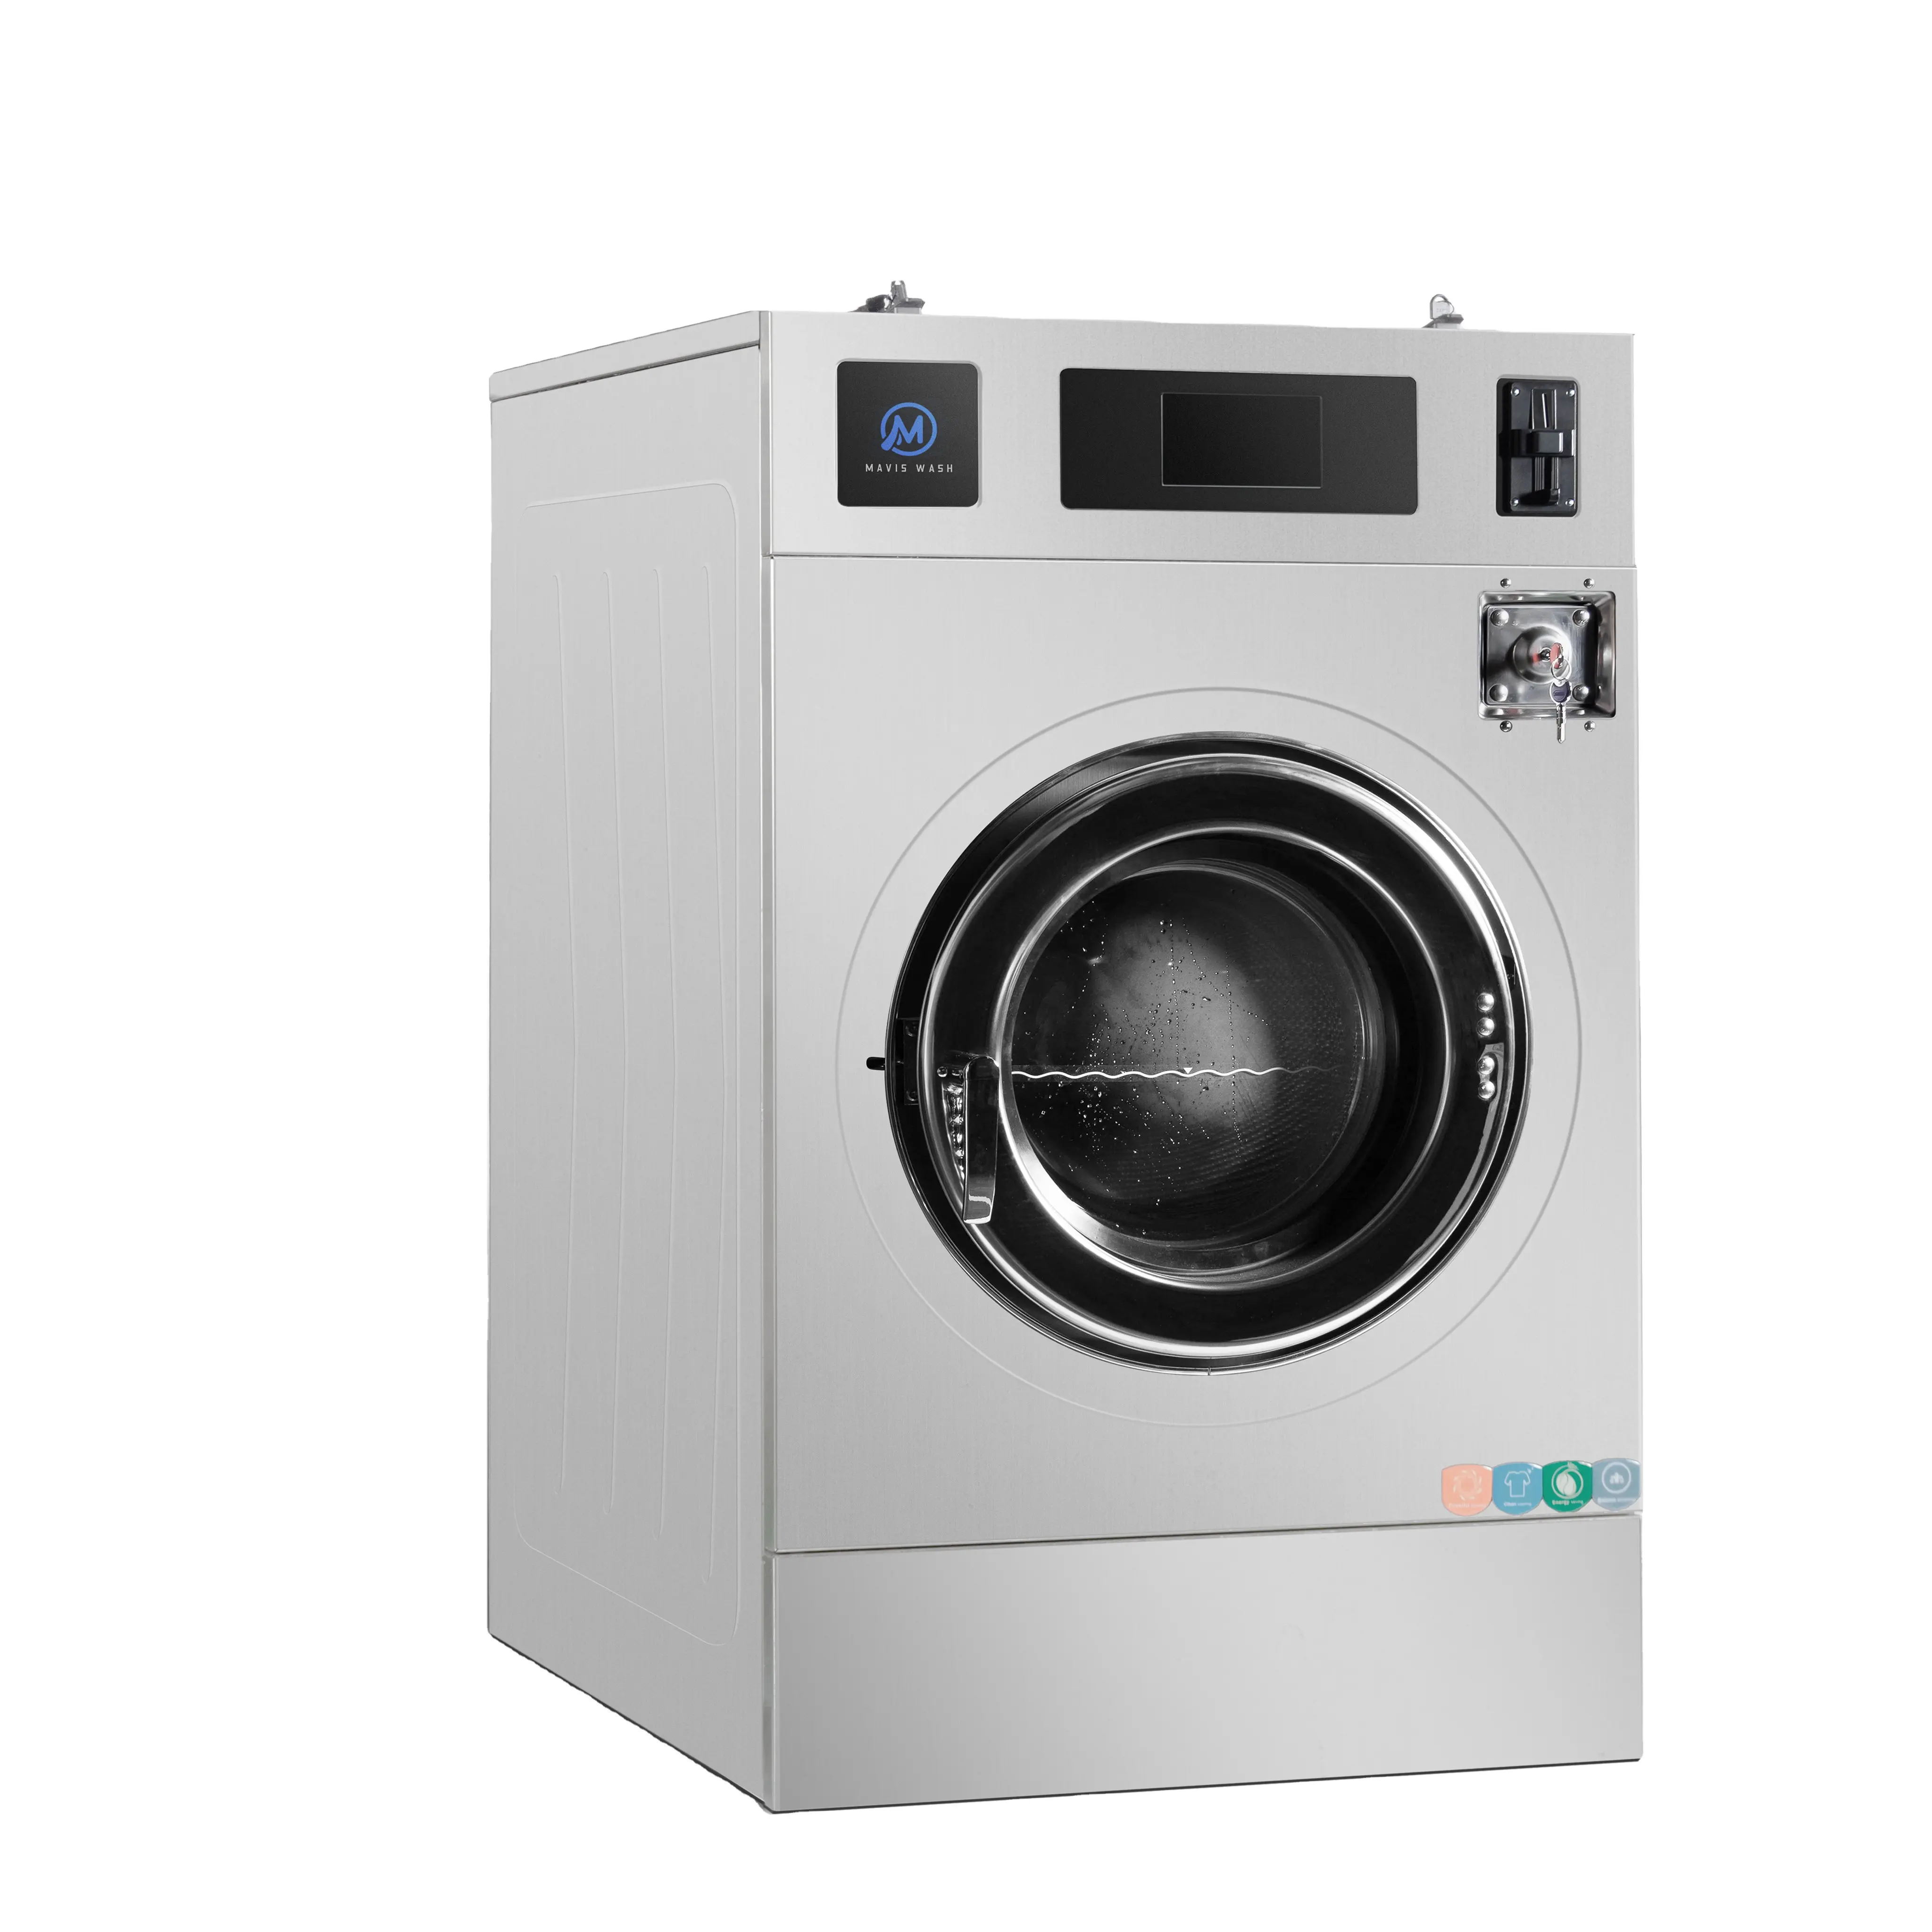 Best-seller luce di lusso grande capacità di lavanderia lavatrice automatica montata rigida 27kg